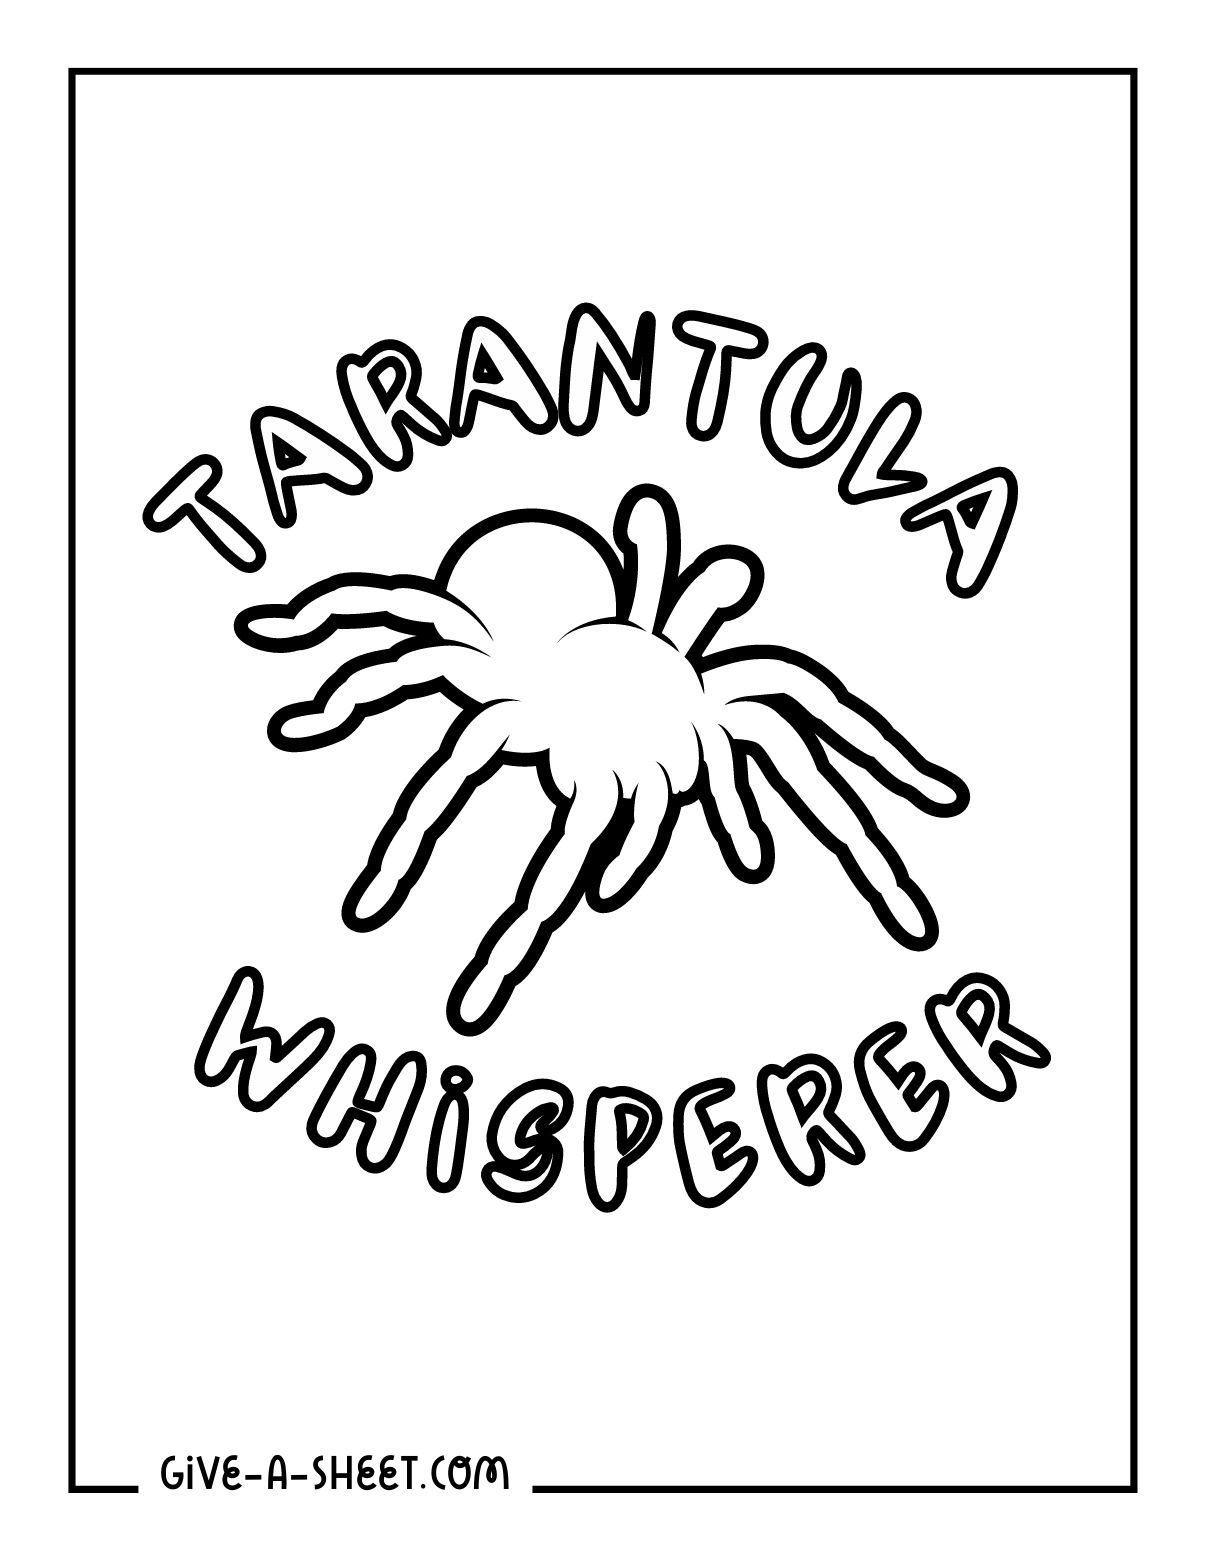 Tarantula whisperer printable coloring pages.